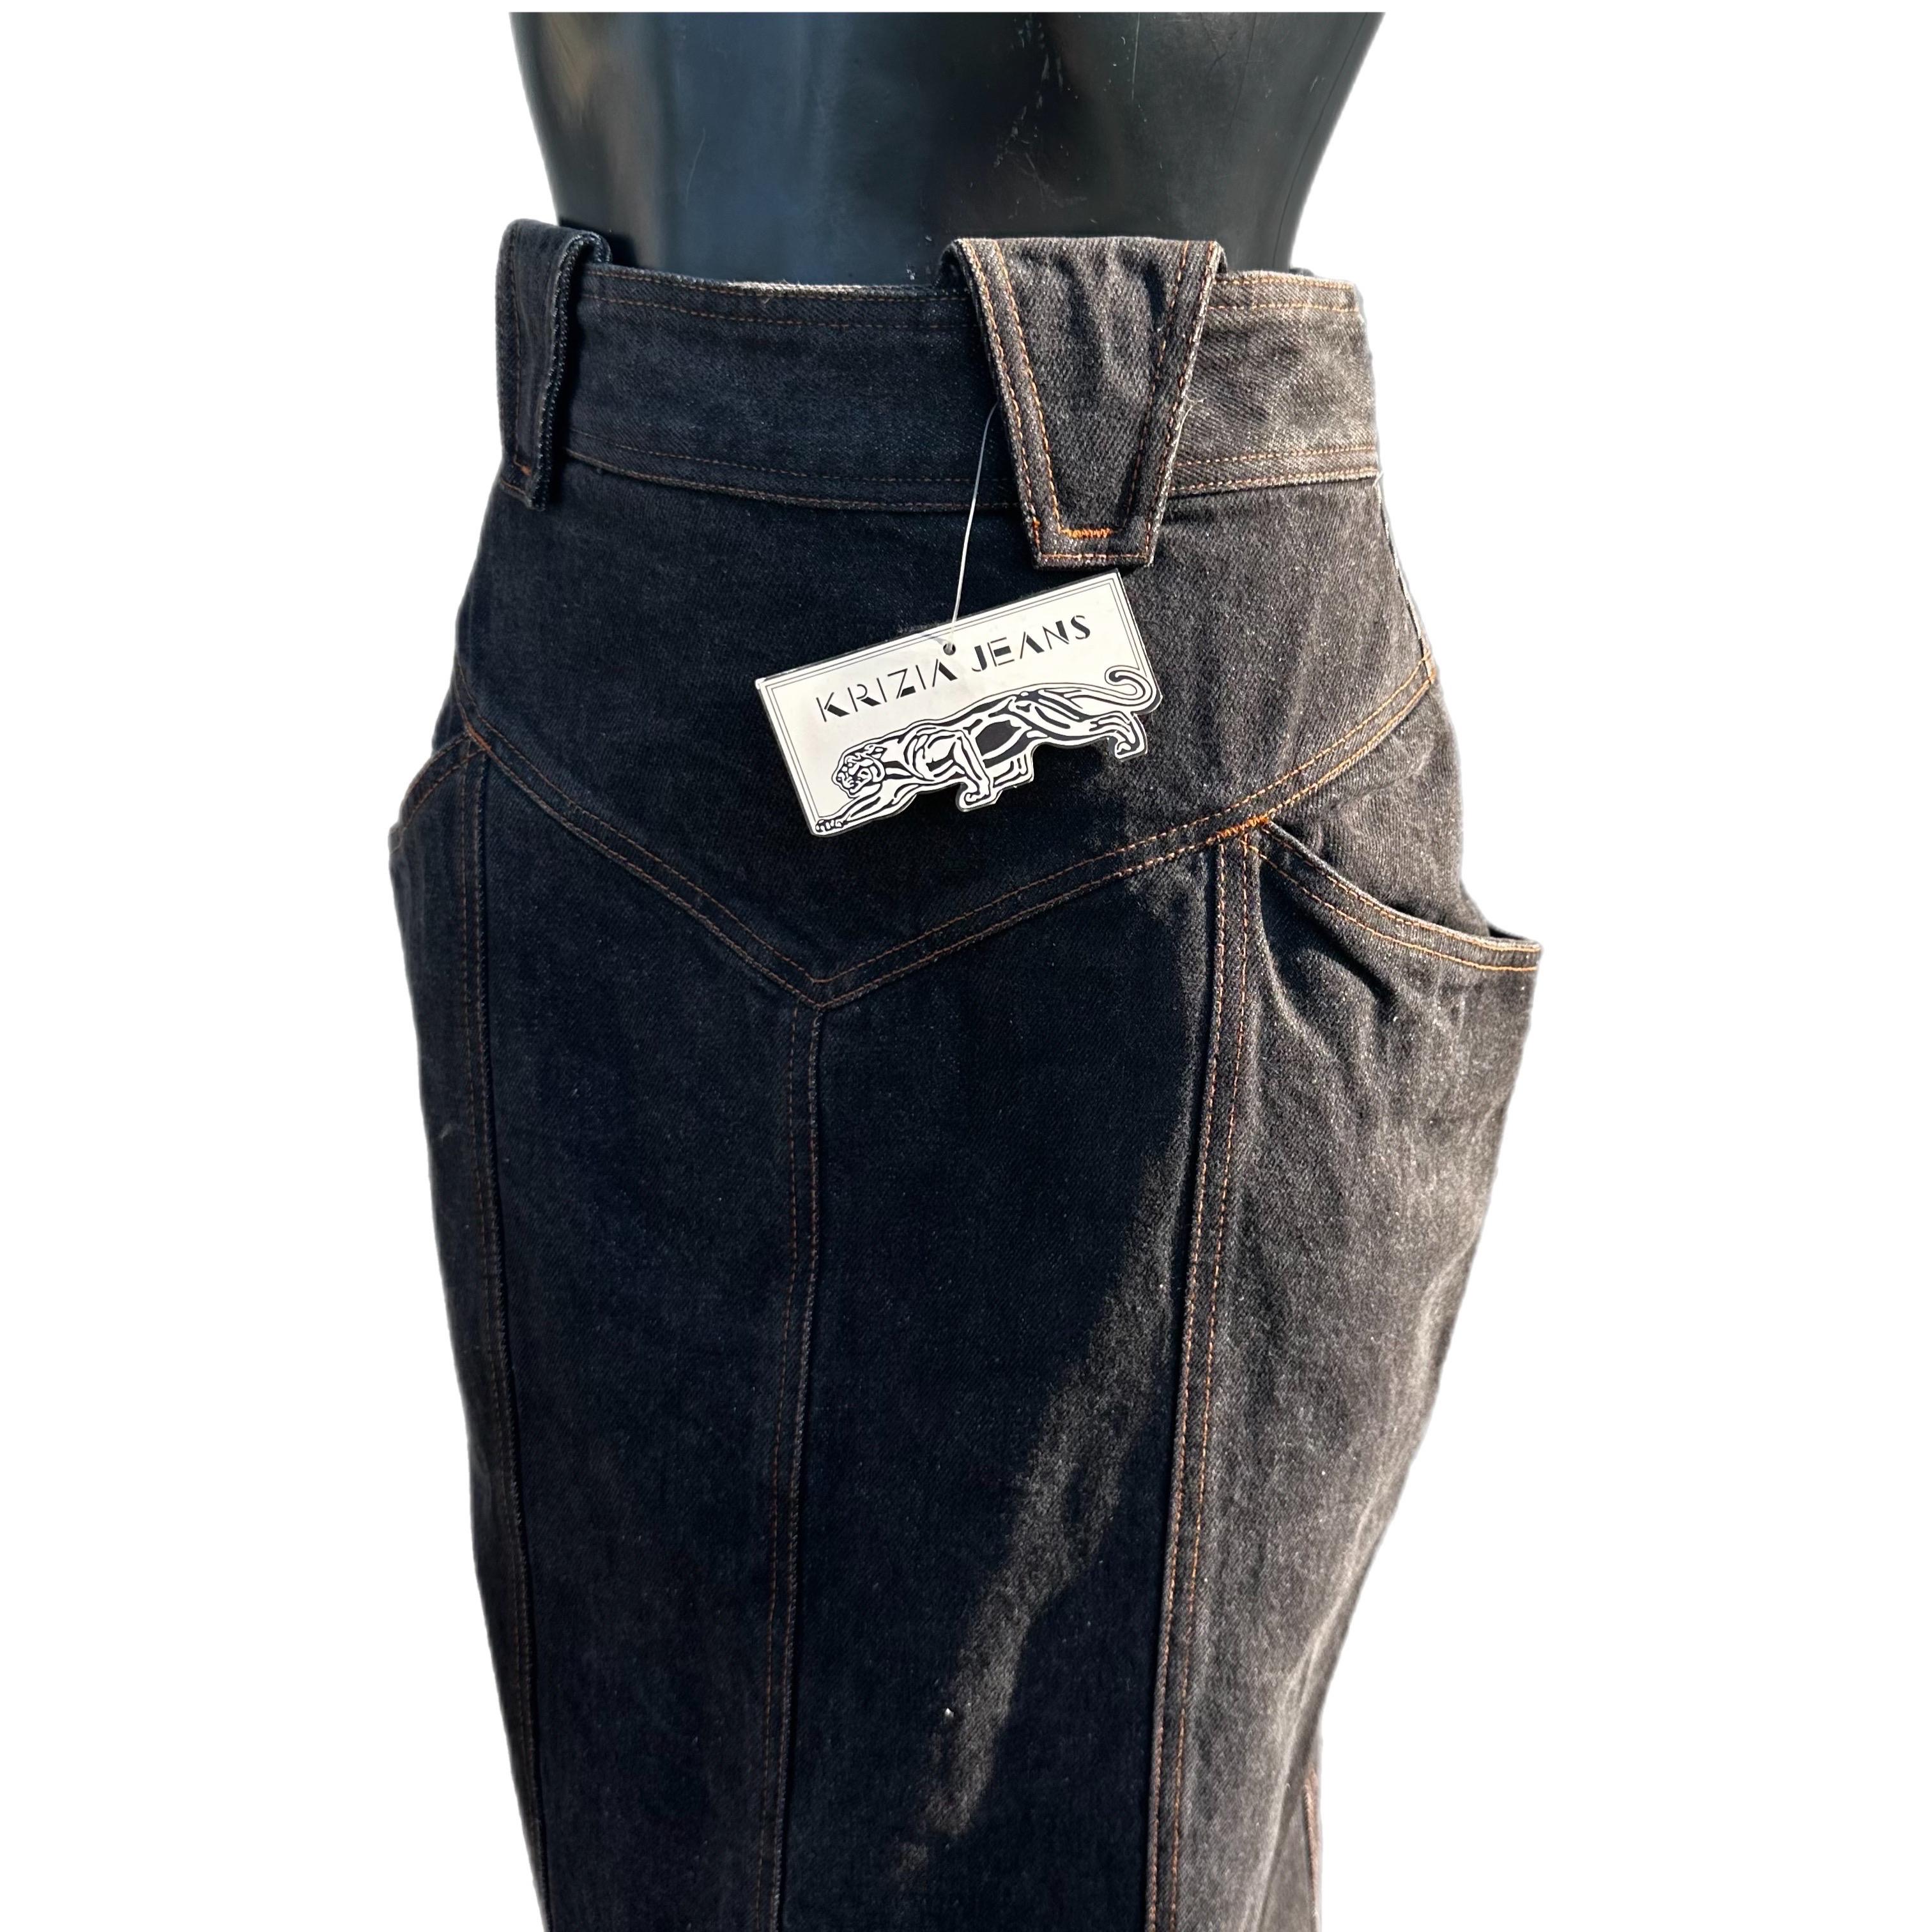 70s vintage skirt in black jeans with tag.
28cm long front zipper
size M
measures:
waist 34cm
Hips 48cm
length 82cm